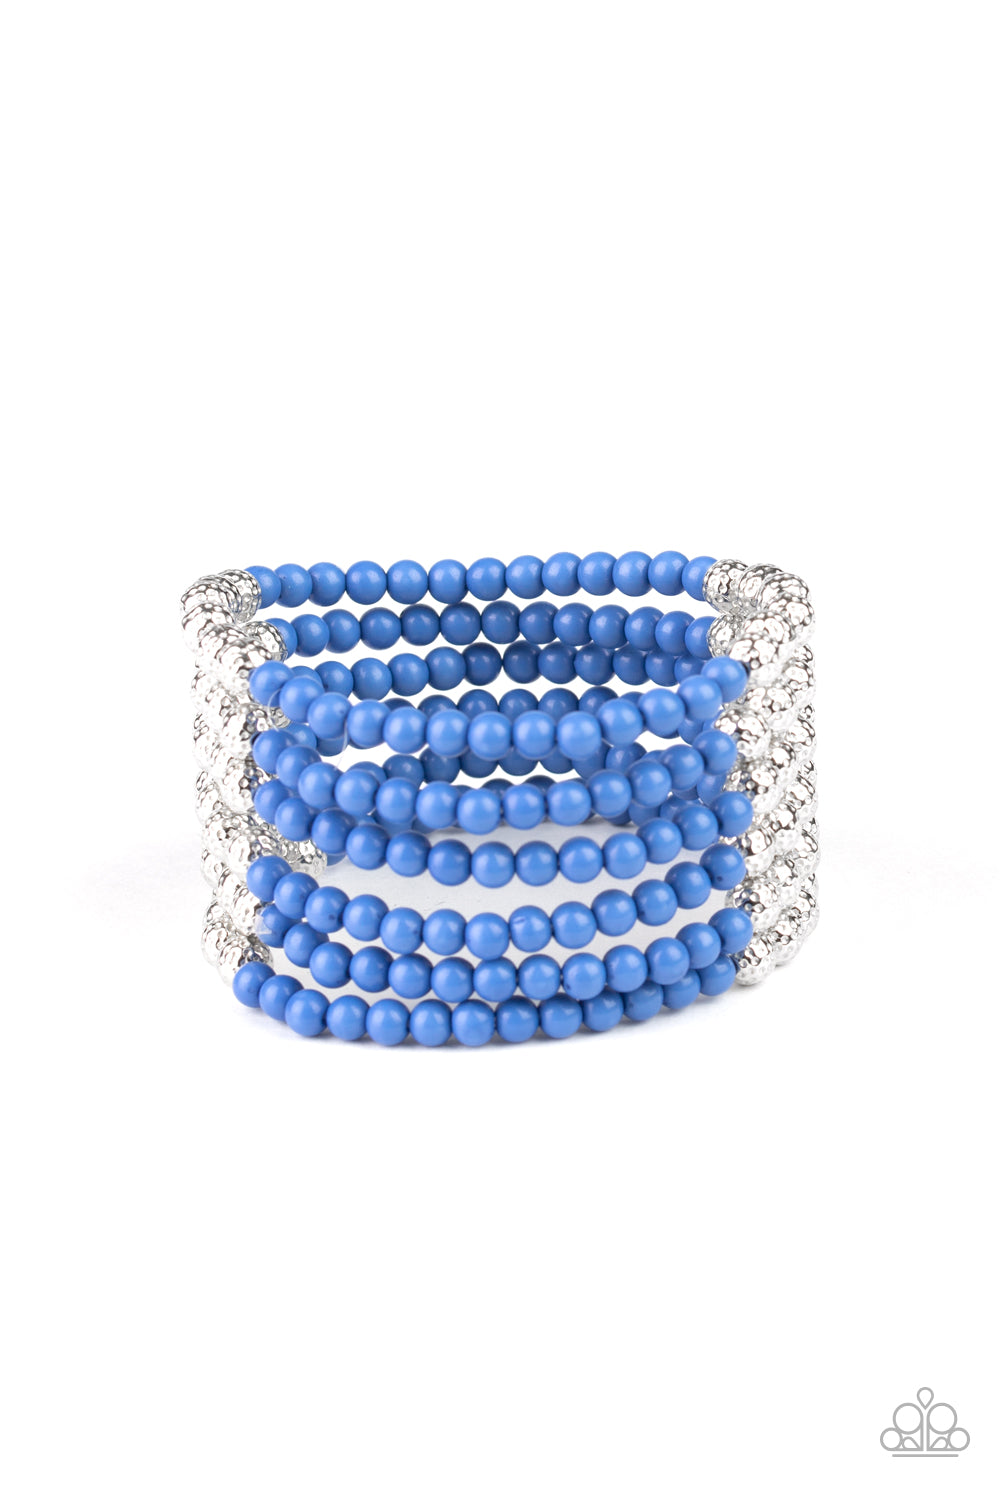 Layer It On Thick - blue - Paparazzi bracelet